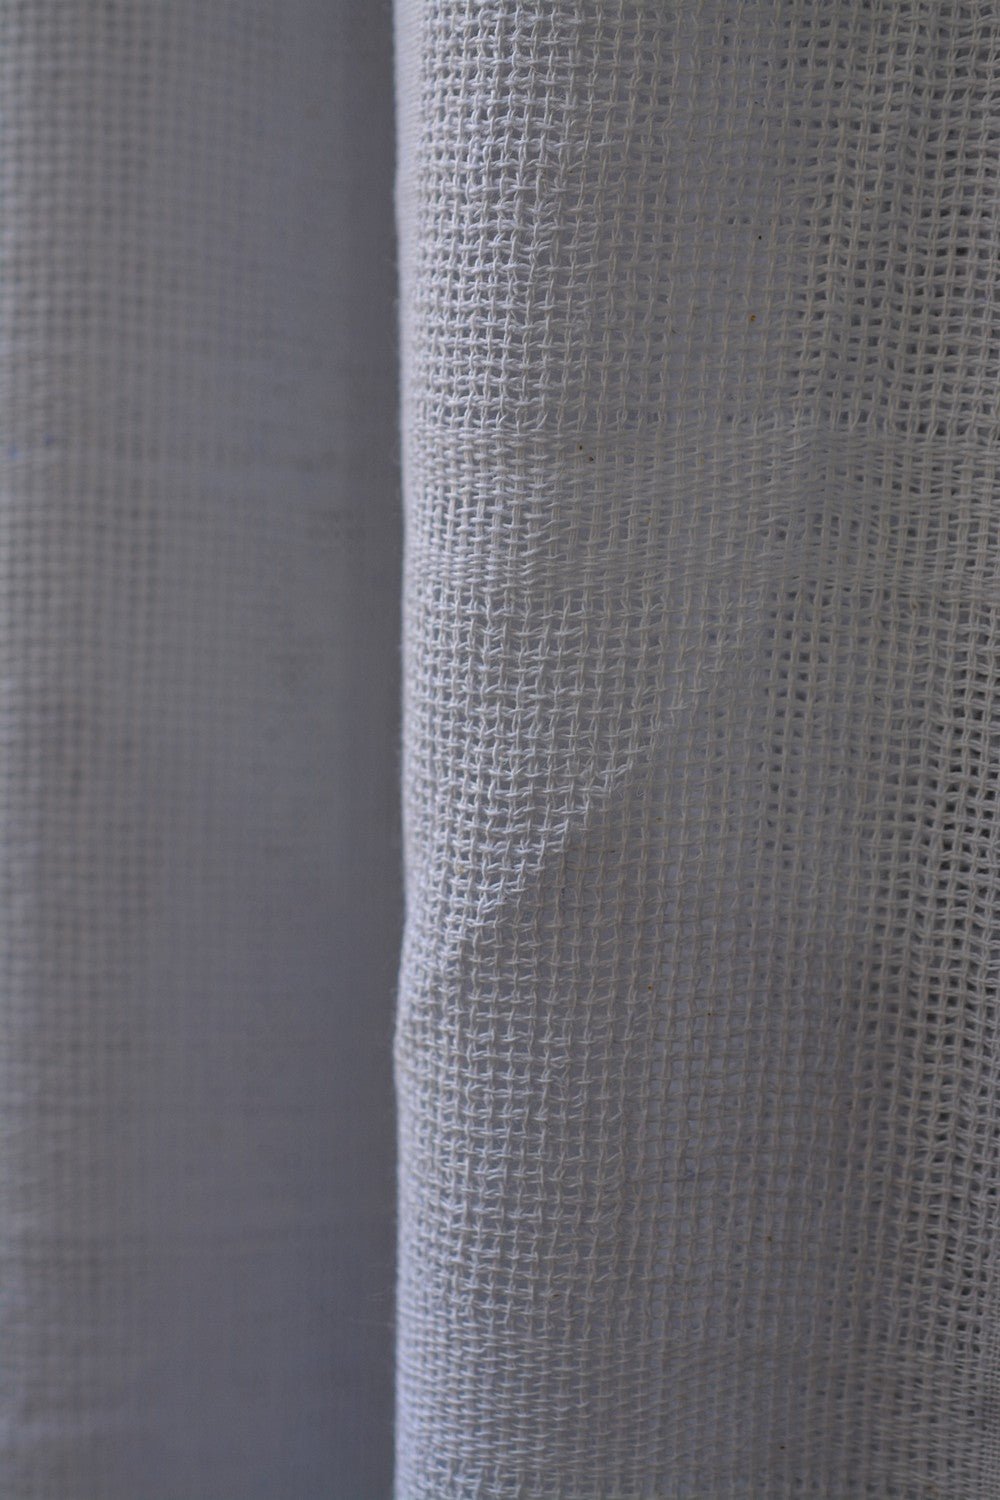 Mosquito net cotton fabric - metaphorracha